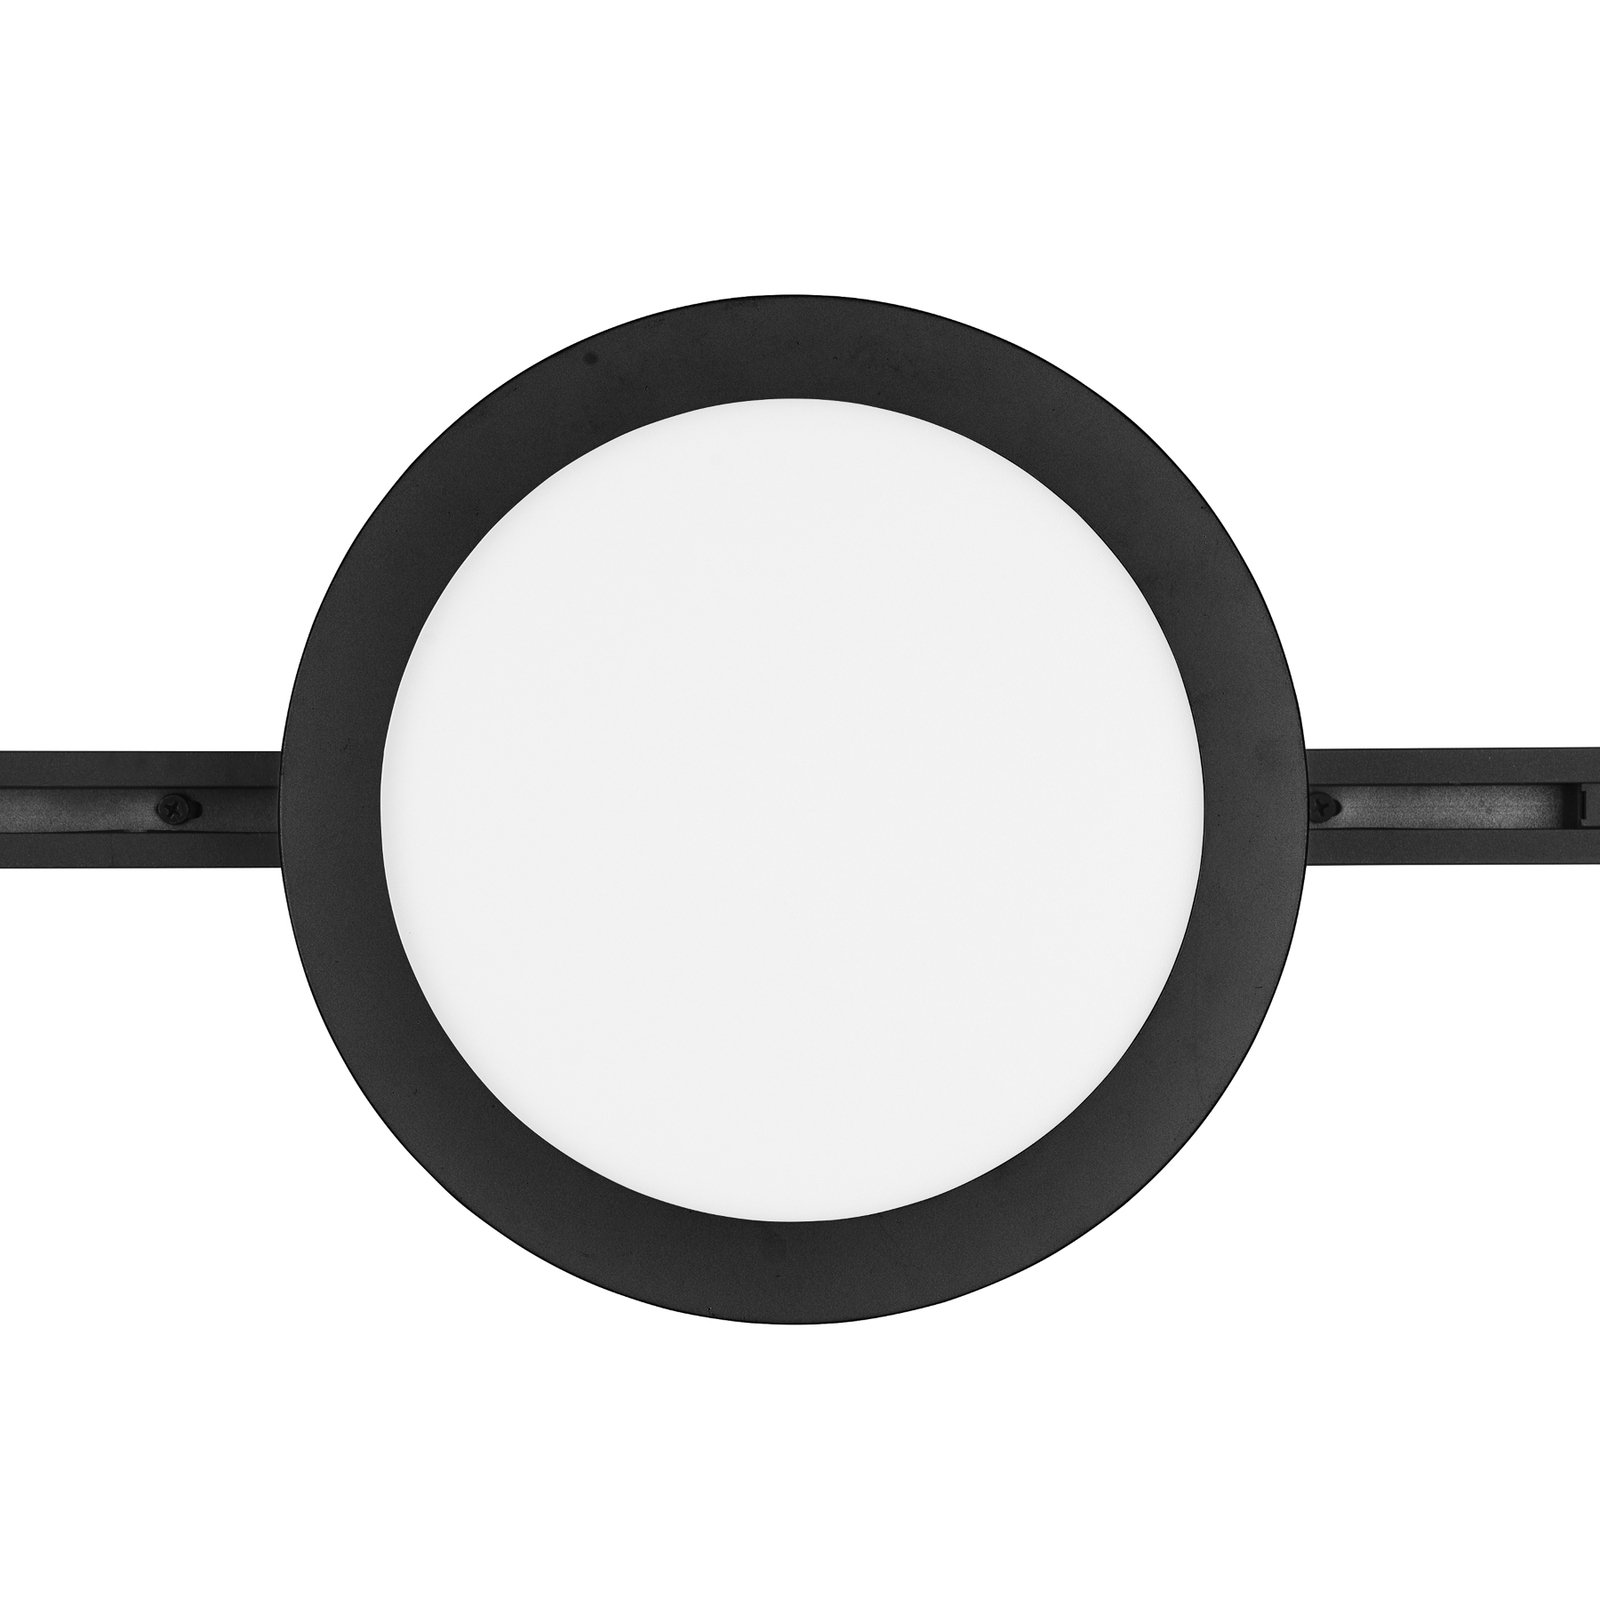 LED-kattovalaisin Camillus DUOline, Ø 26 cm, musta